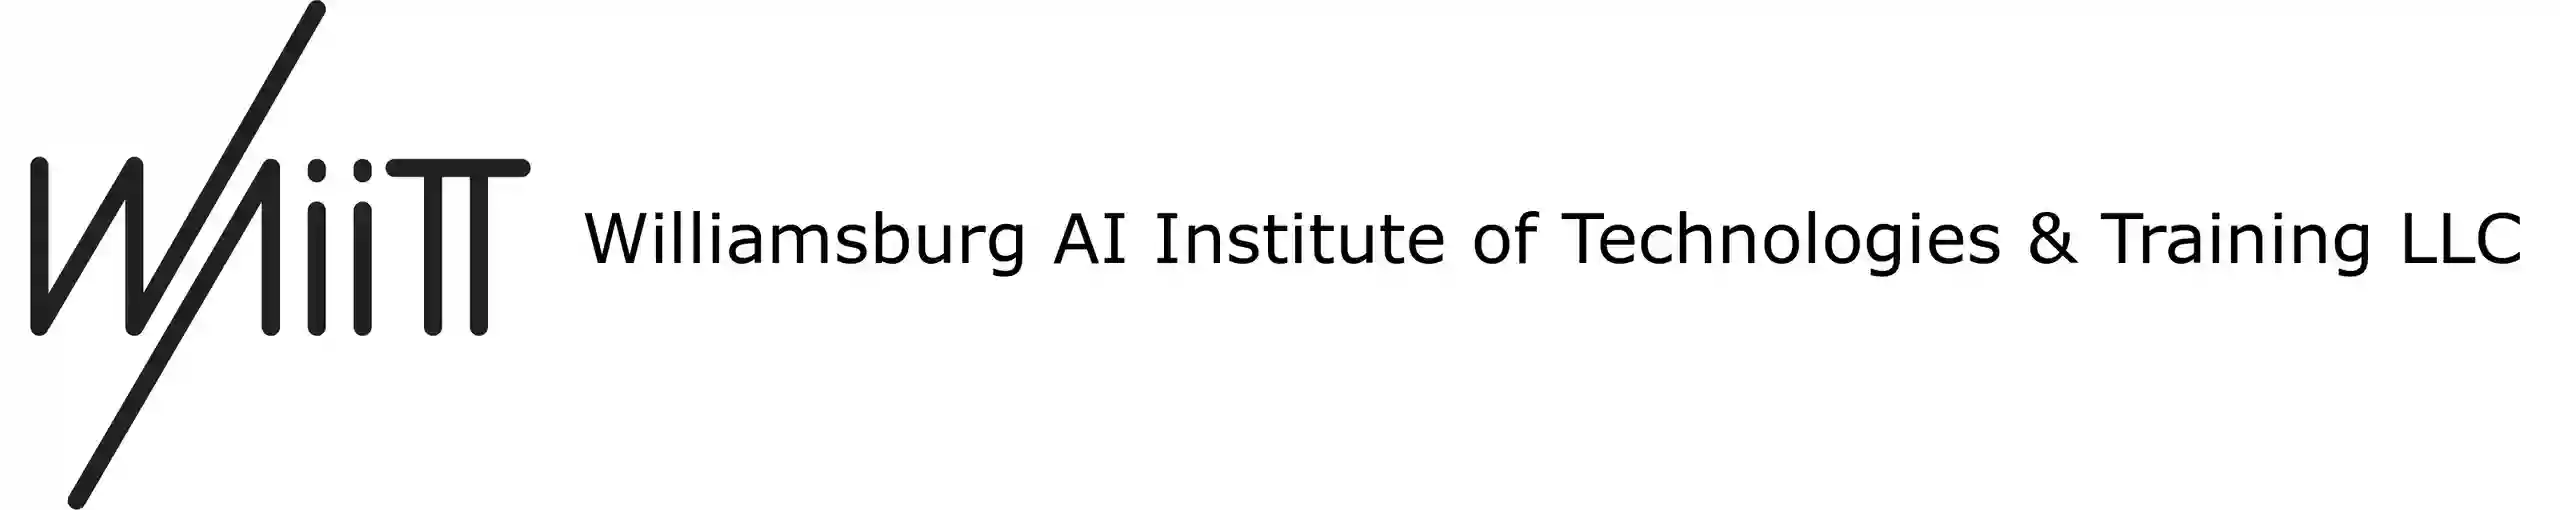 Williamsburg AI Technologies & Training WAIITT LLC